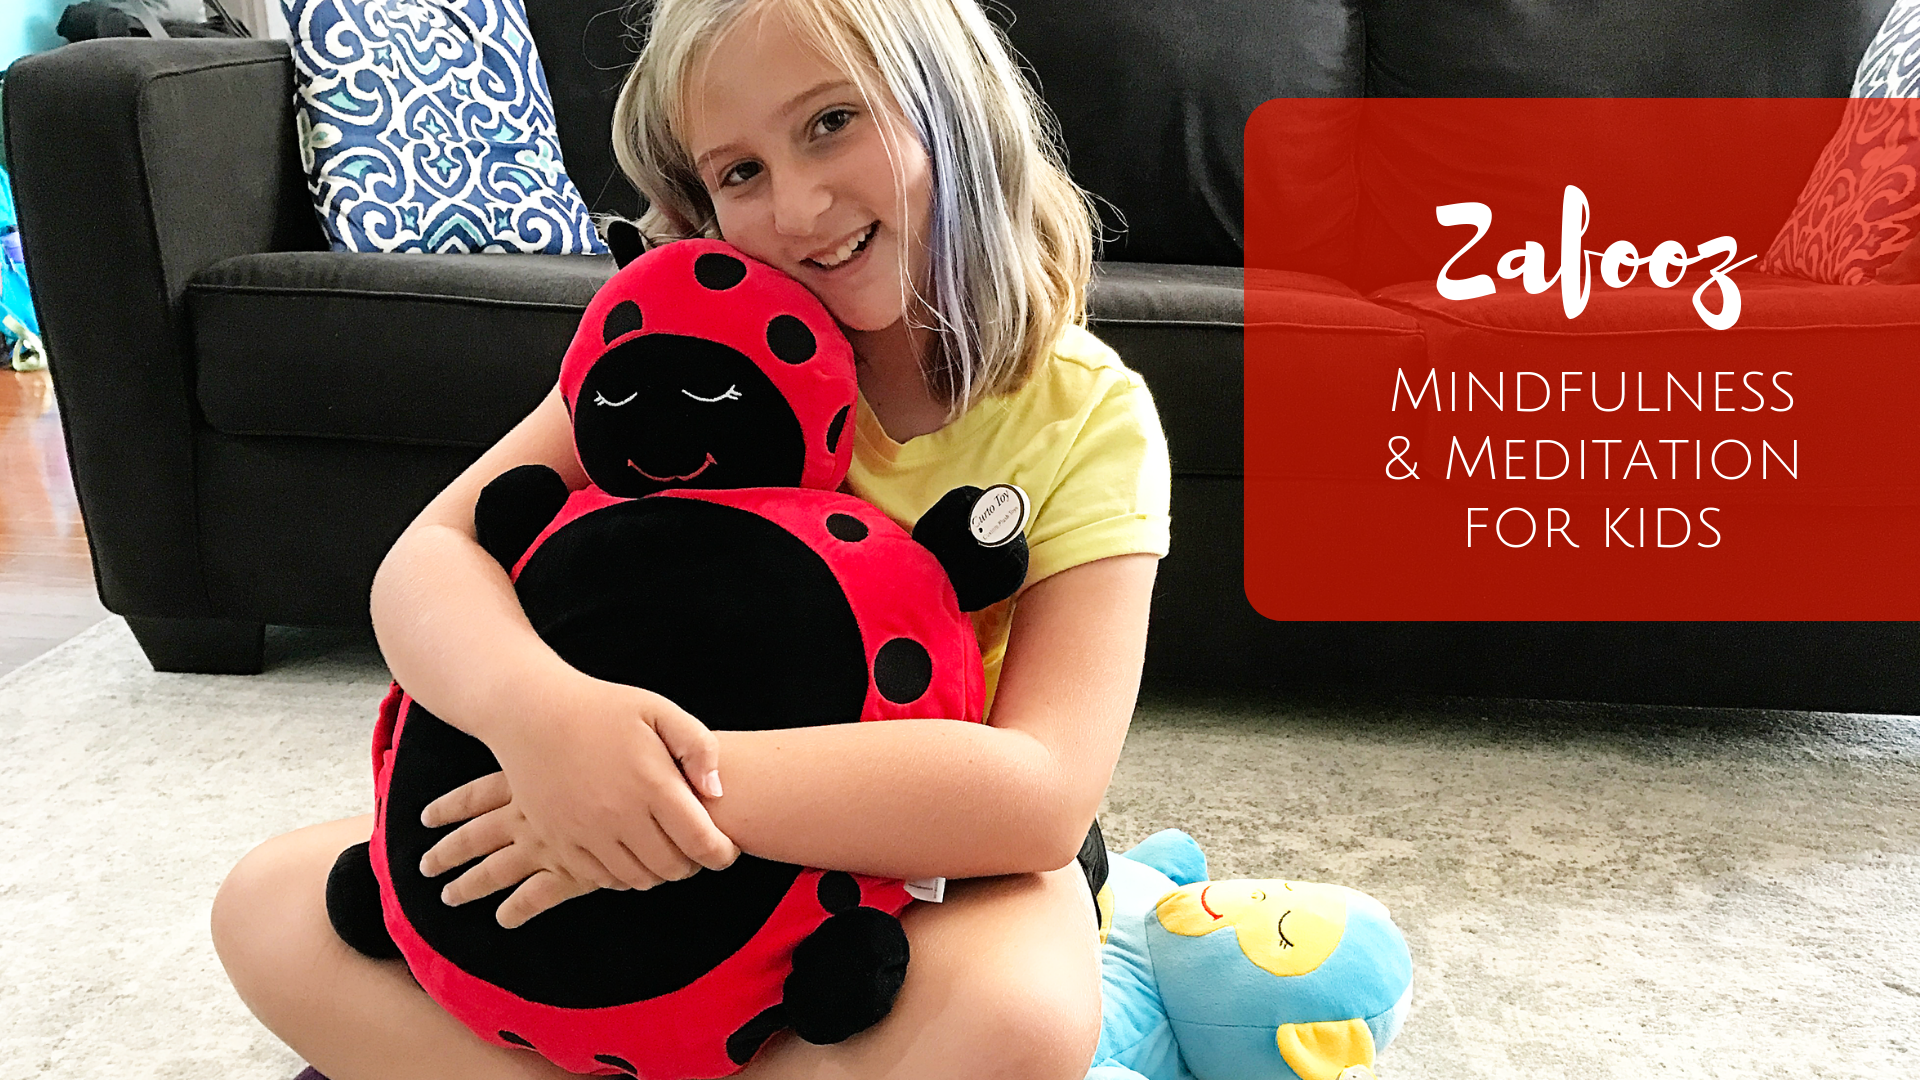 Mindfulness & Meditation for kids with Zafooz